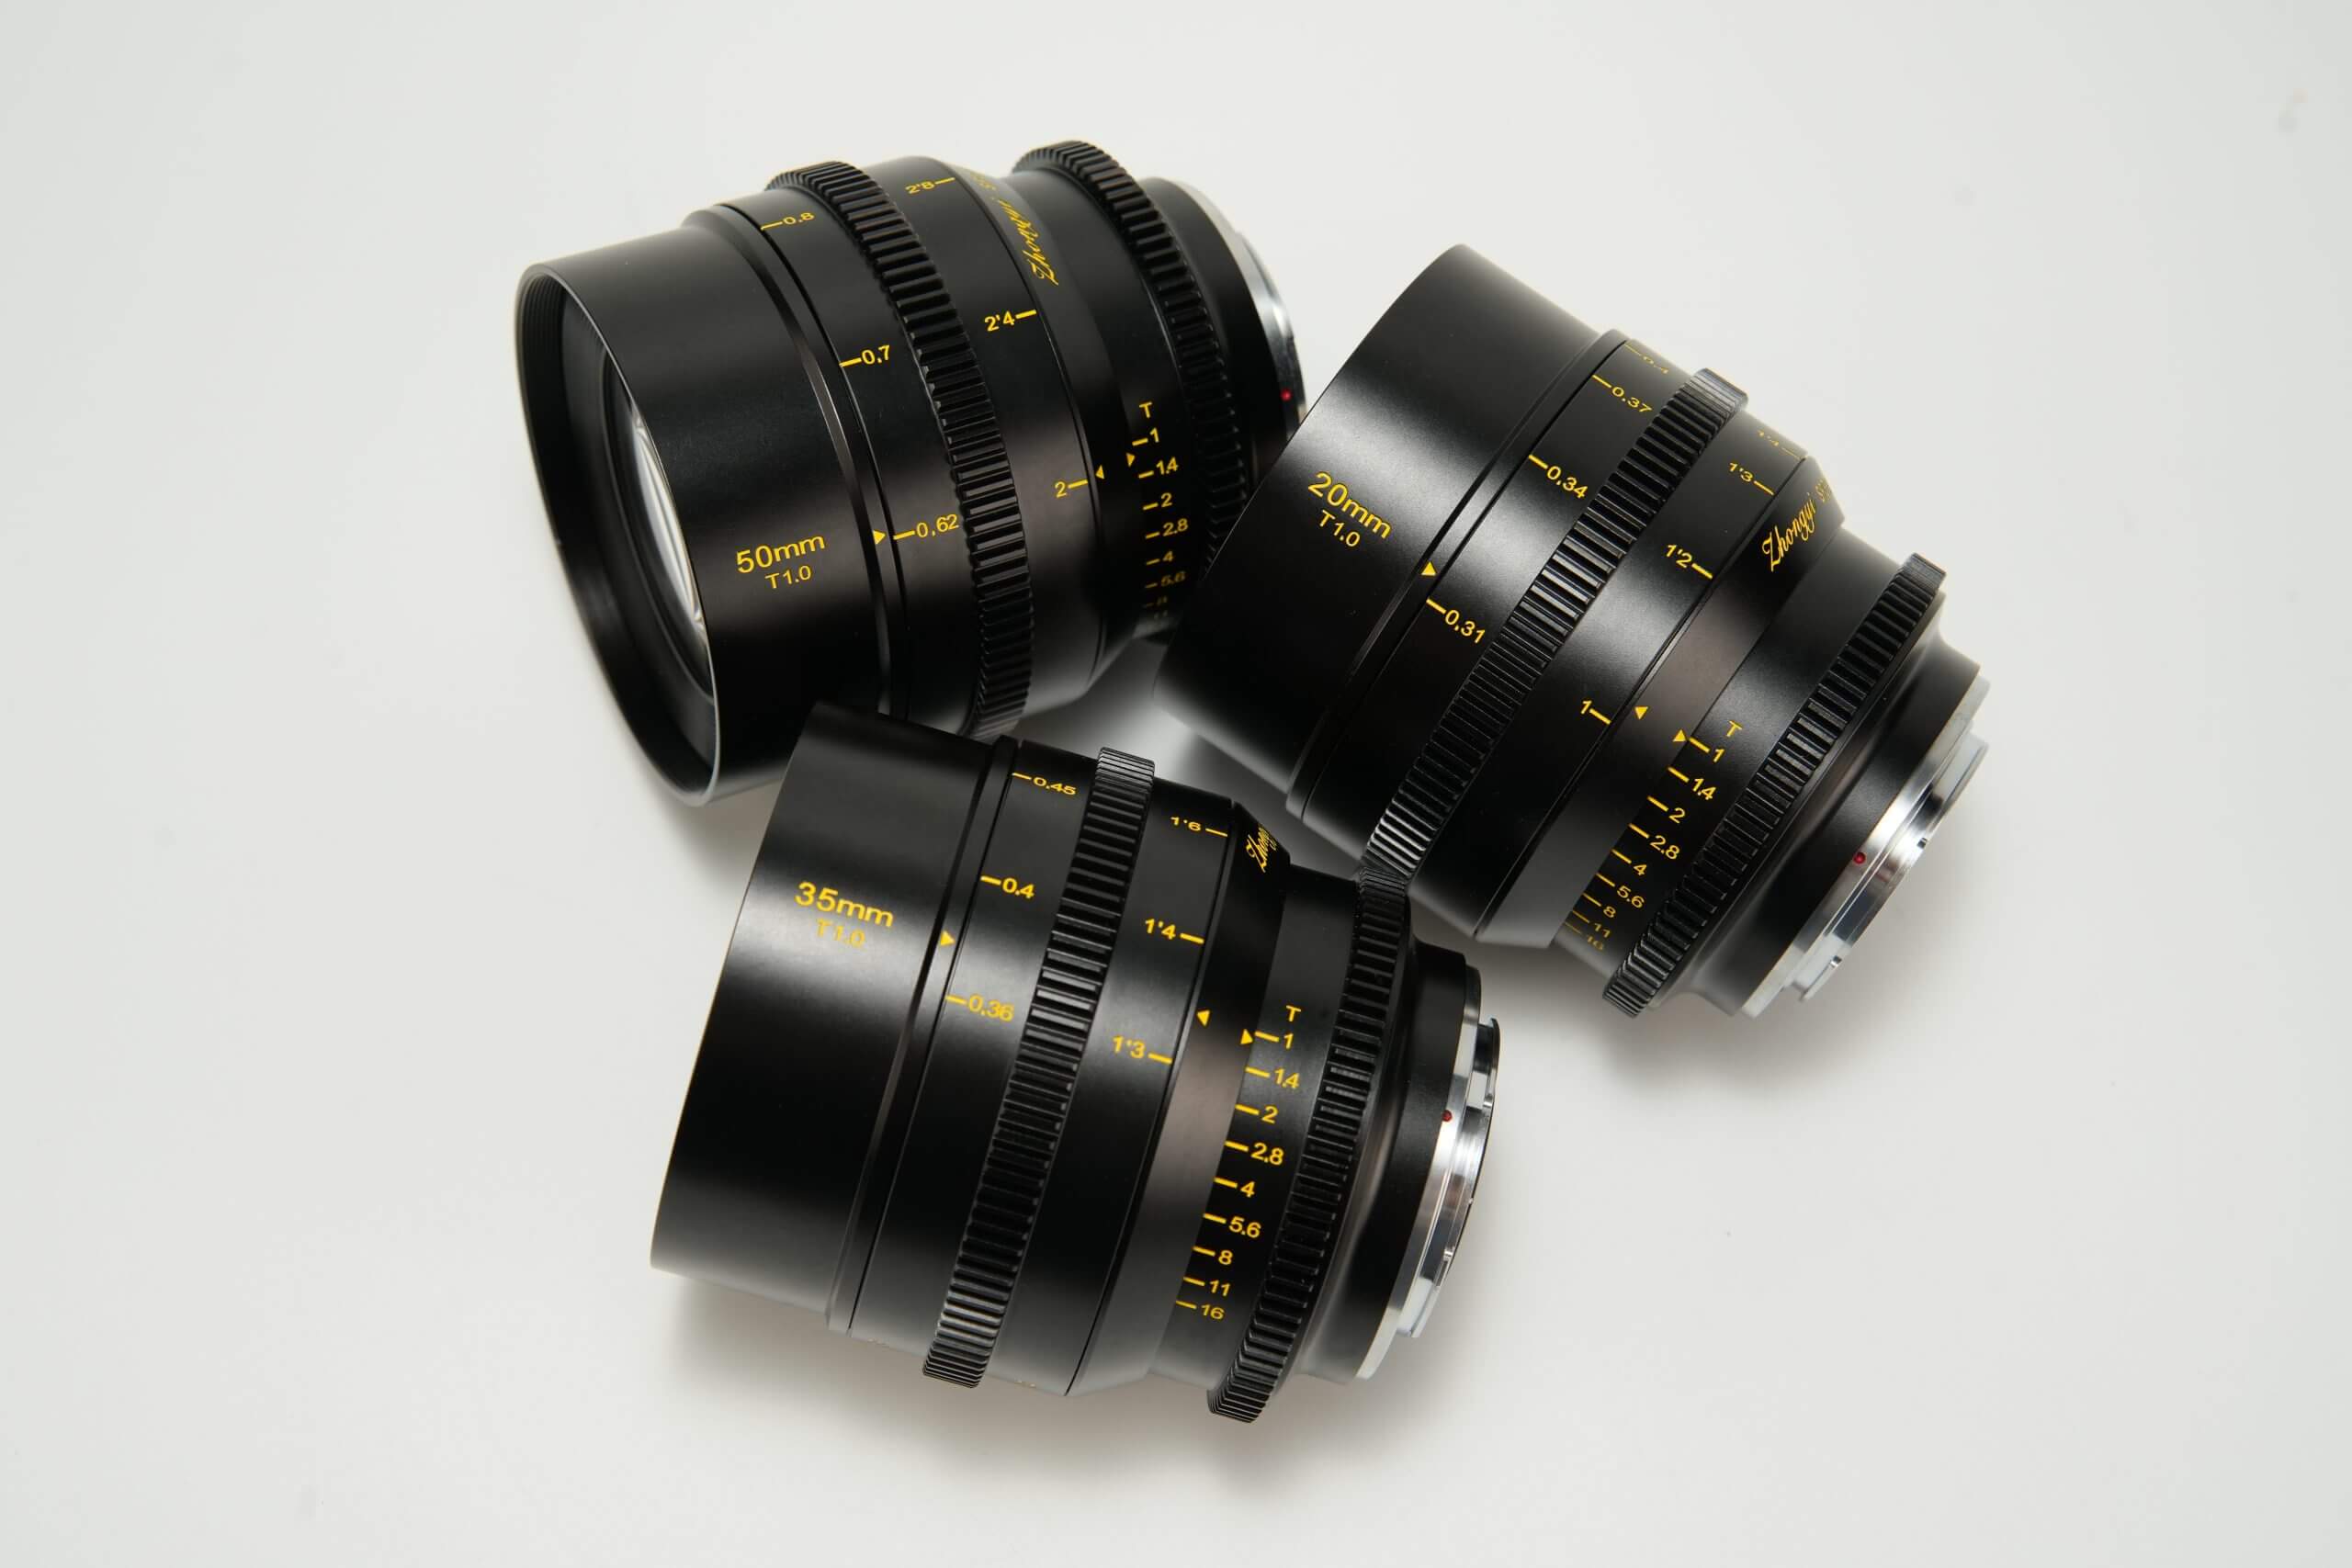 DSC07698 scaled - Mitakon Speedmaster 20mm/35mm/50mm S35 T1 Cine Lens Set Launched